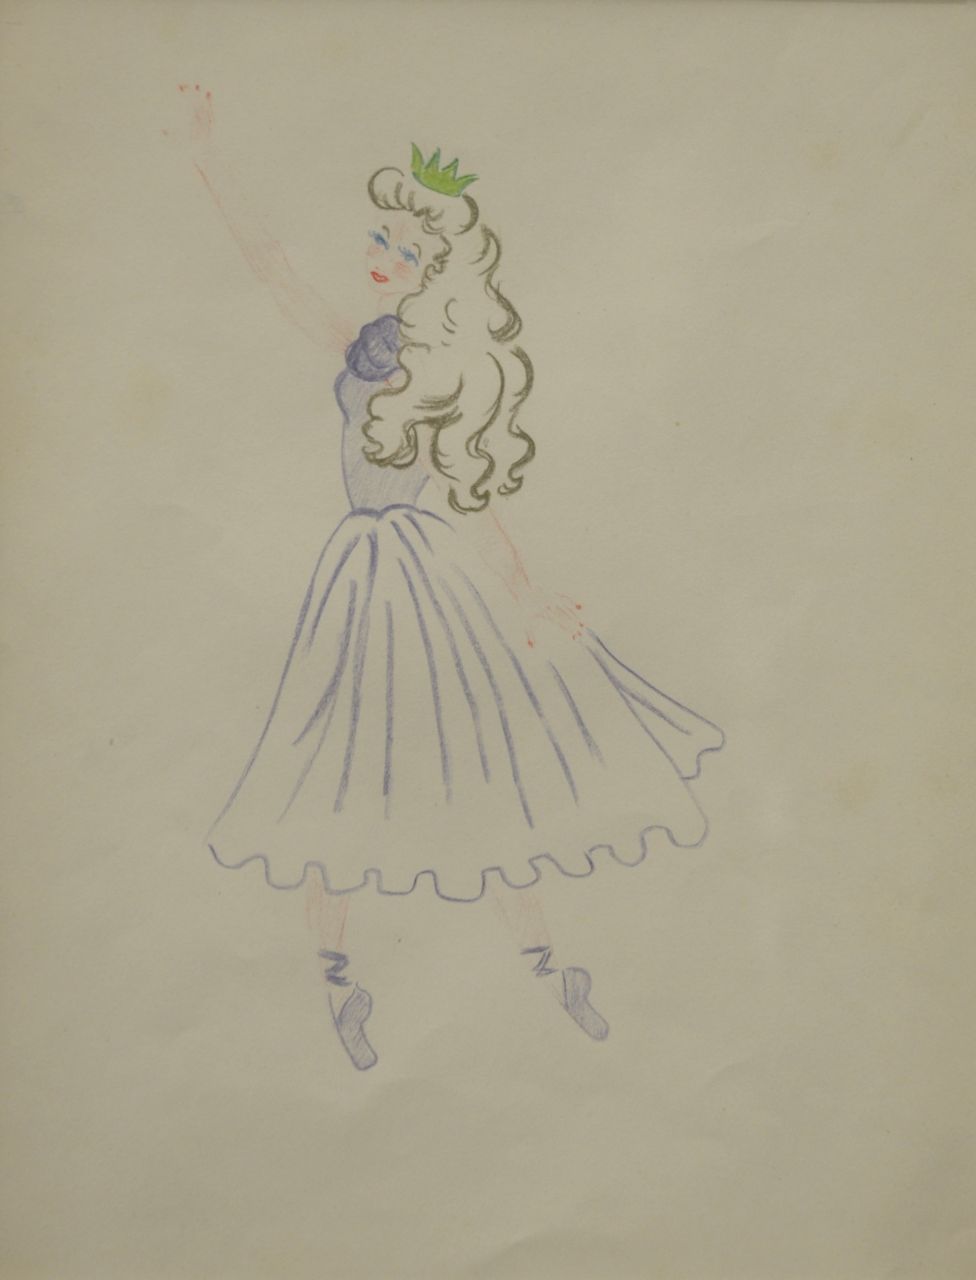 Oranje-Nassau (Prinses Beatrix) B.W.A. van | Beatrix Wilhelmina Armgard van Oranje-Nassau (Prinses Beatrix), Ballet princess, coloured pencil on paper 30.0 x 23.0 cm